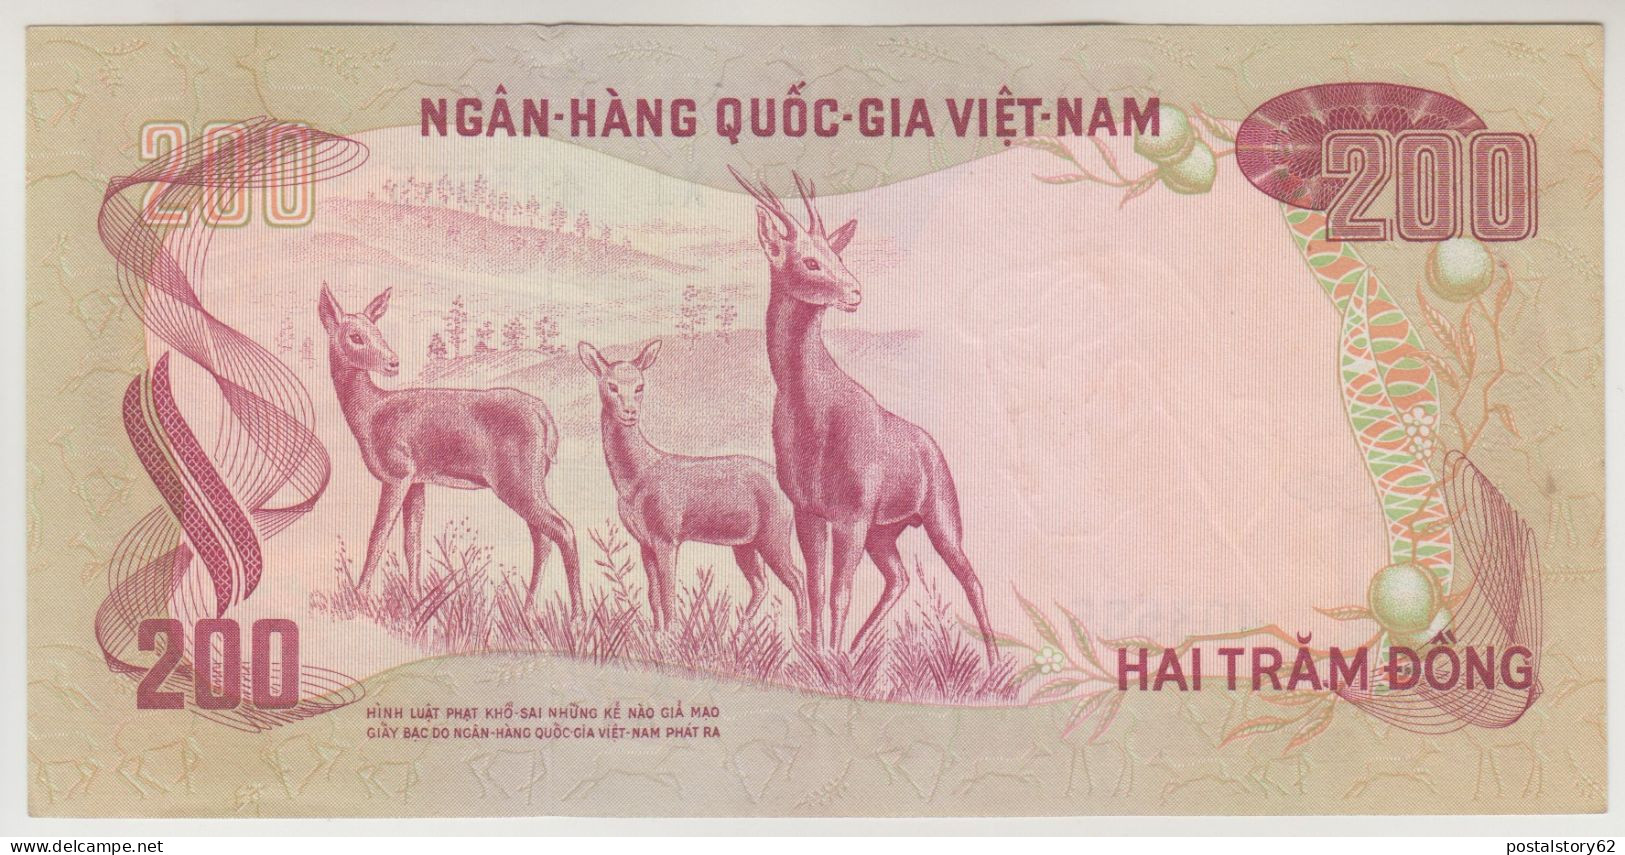 Vietnam Del Sud, Banconota 200 Dong 1972 ND, P32 FDS - Vietnam